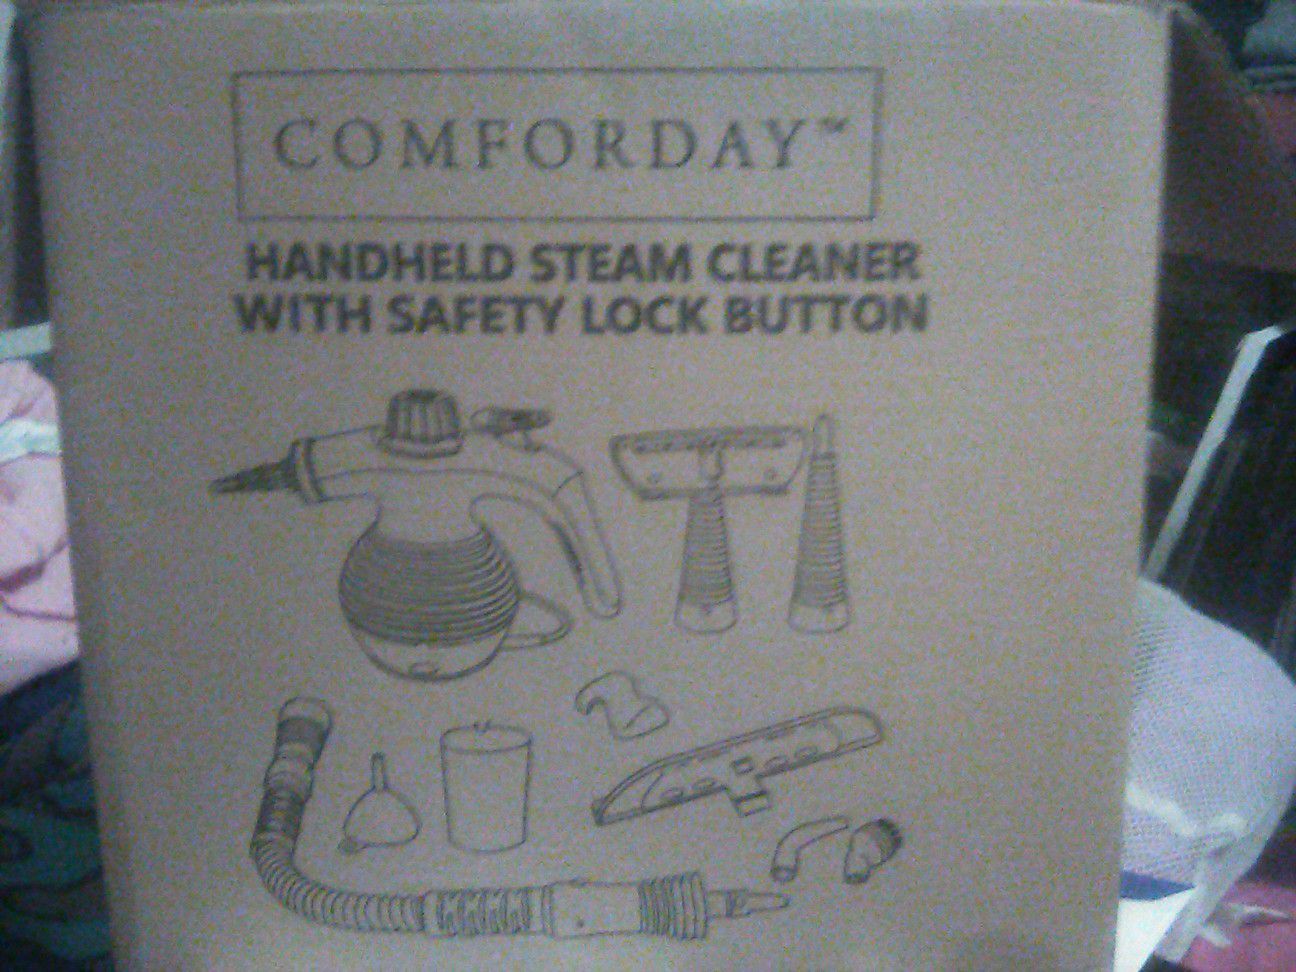 Handheld Steam Cleaner